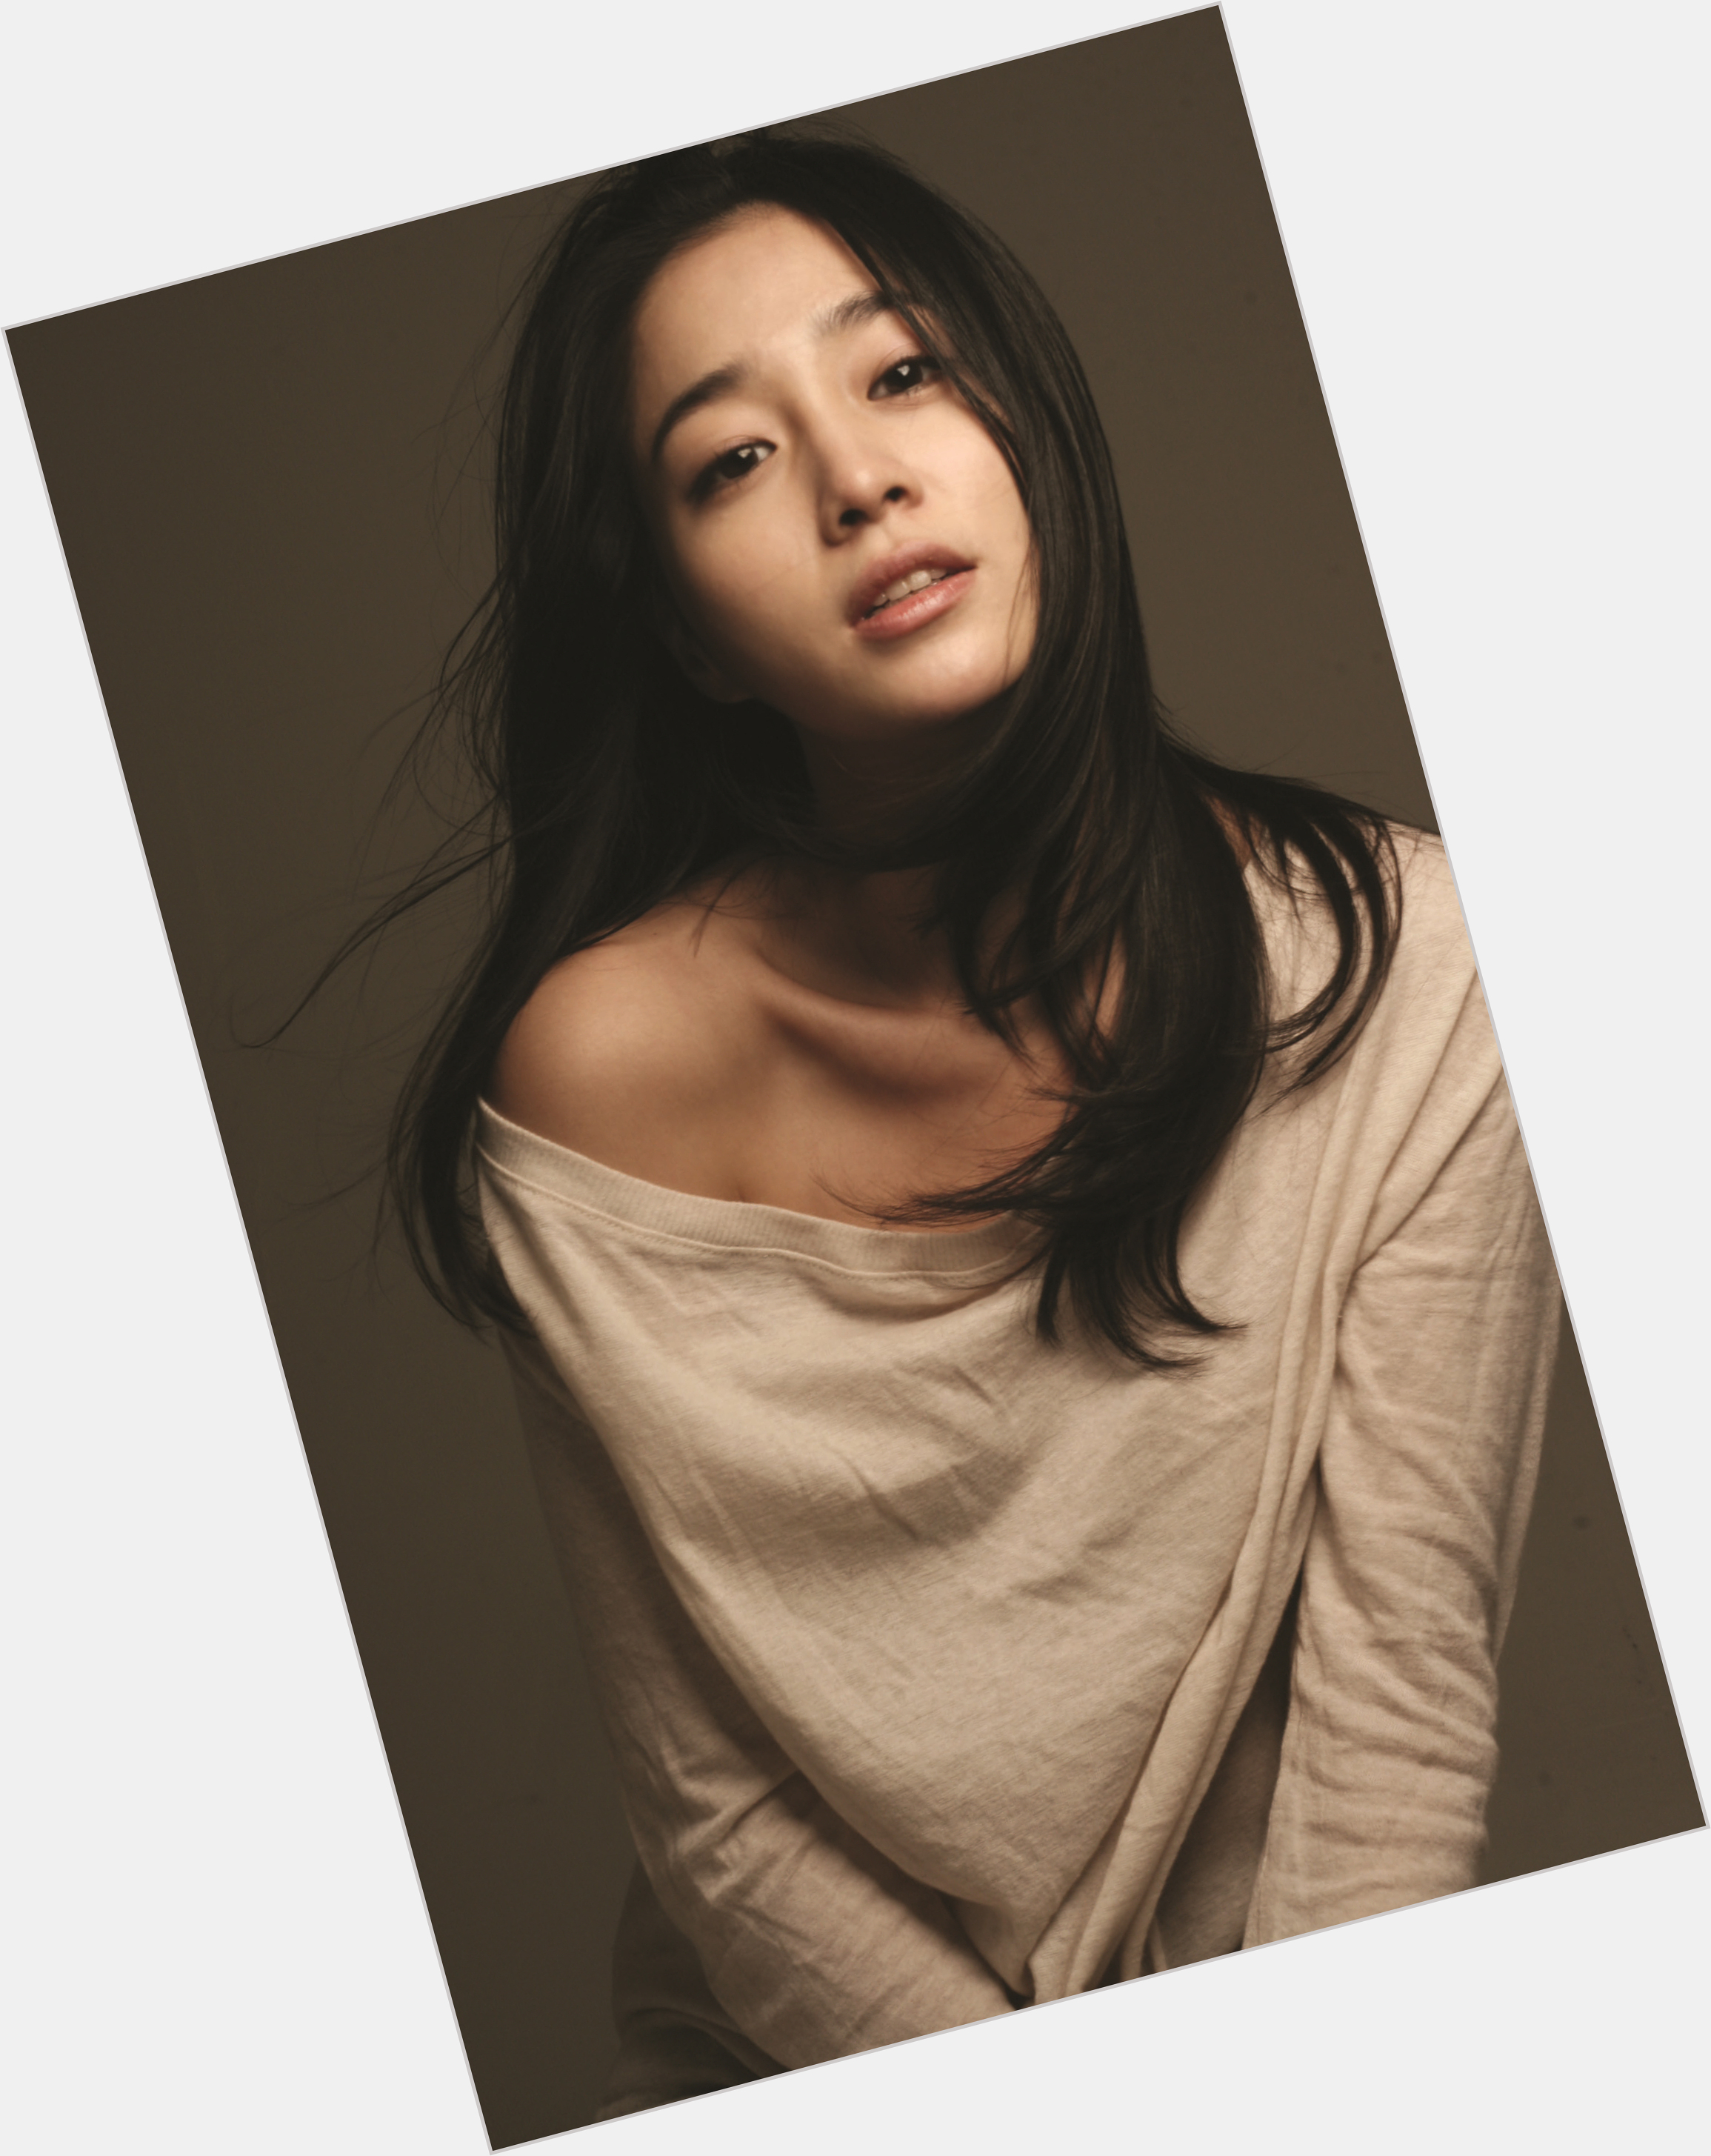 Lee Min jung sexy 3